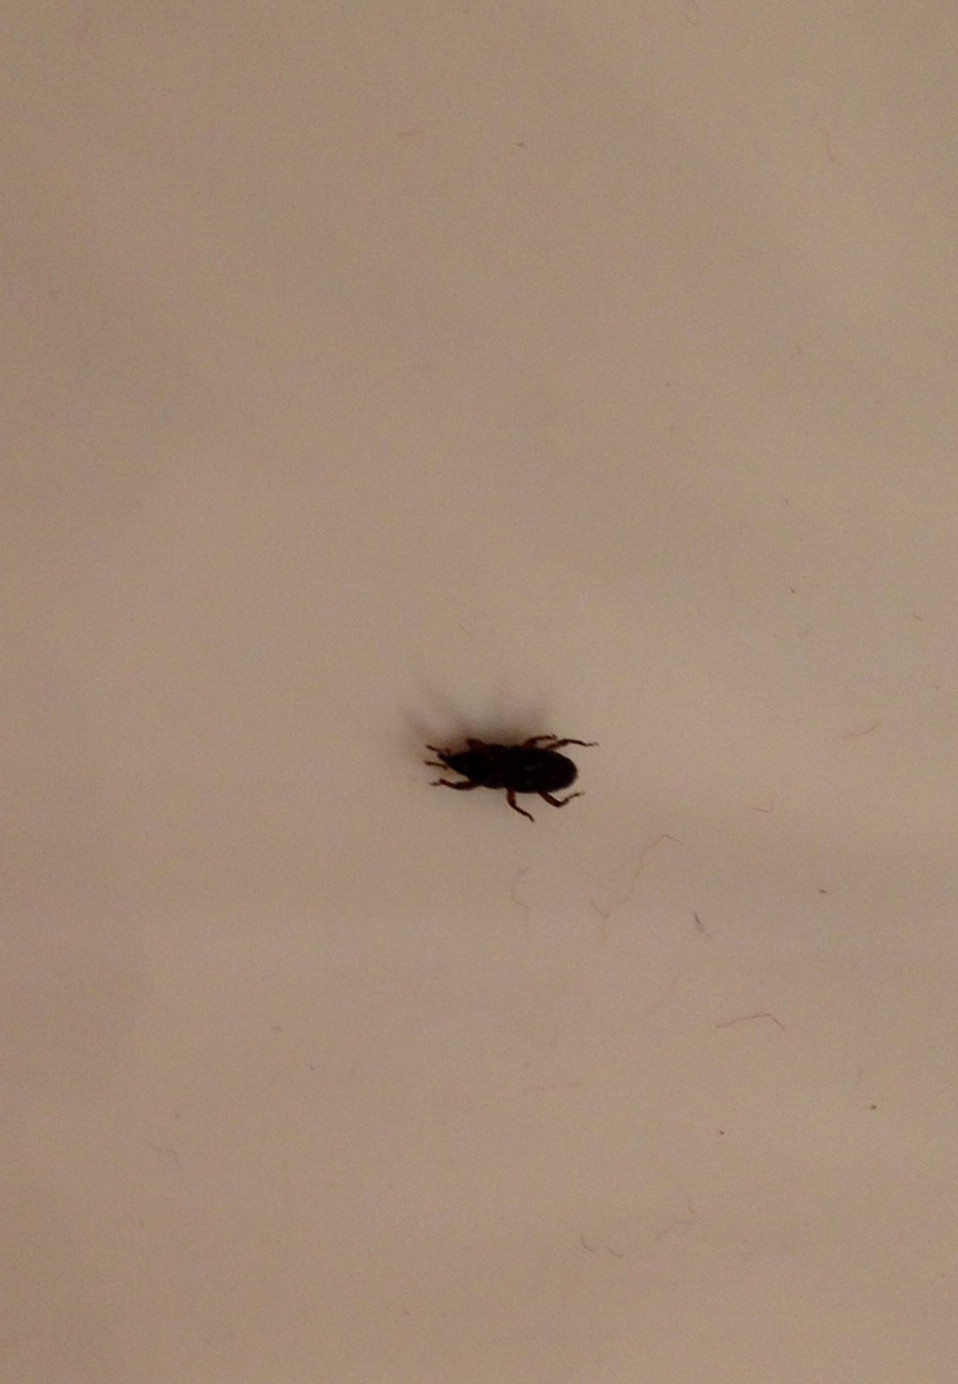 Small Flying Bugs In Bathroom
 We keep seeing these bugs in the bathroom tub & floor